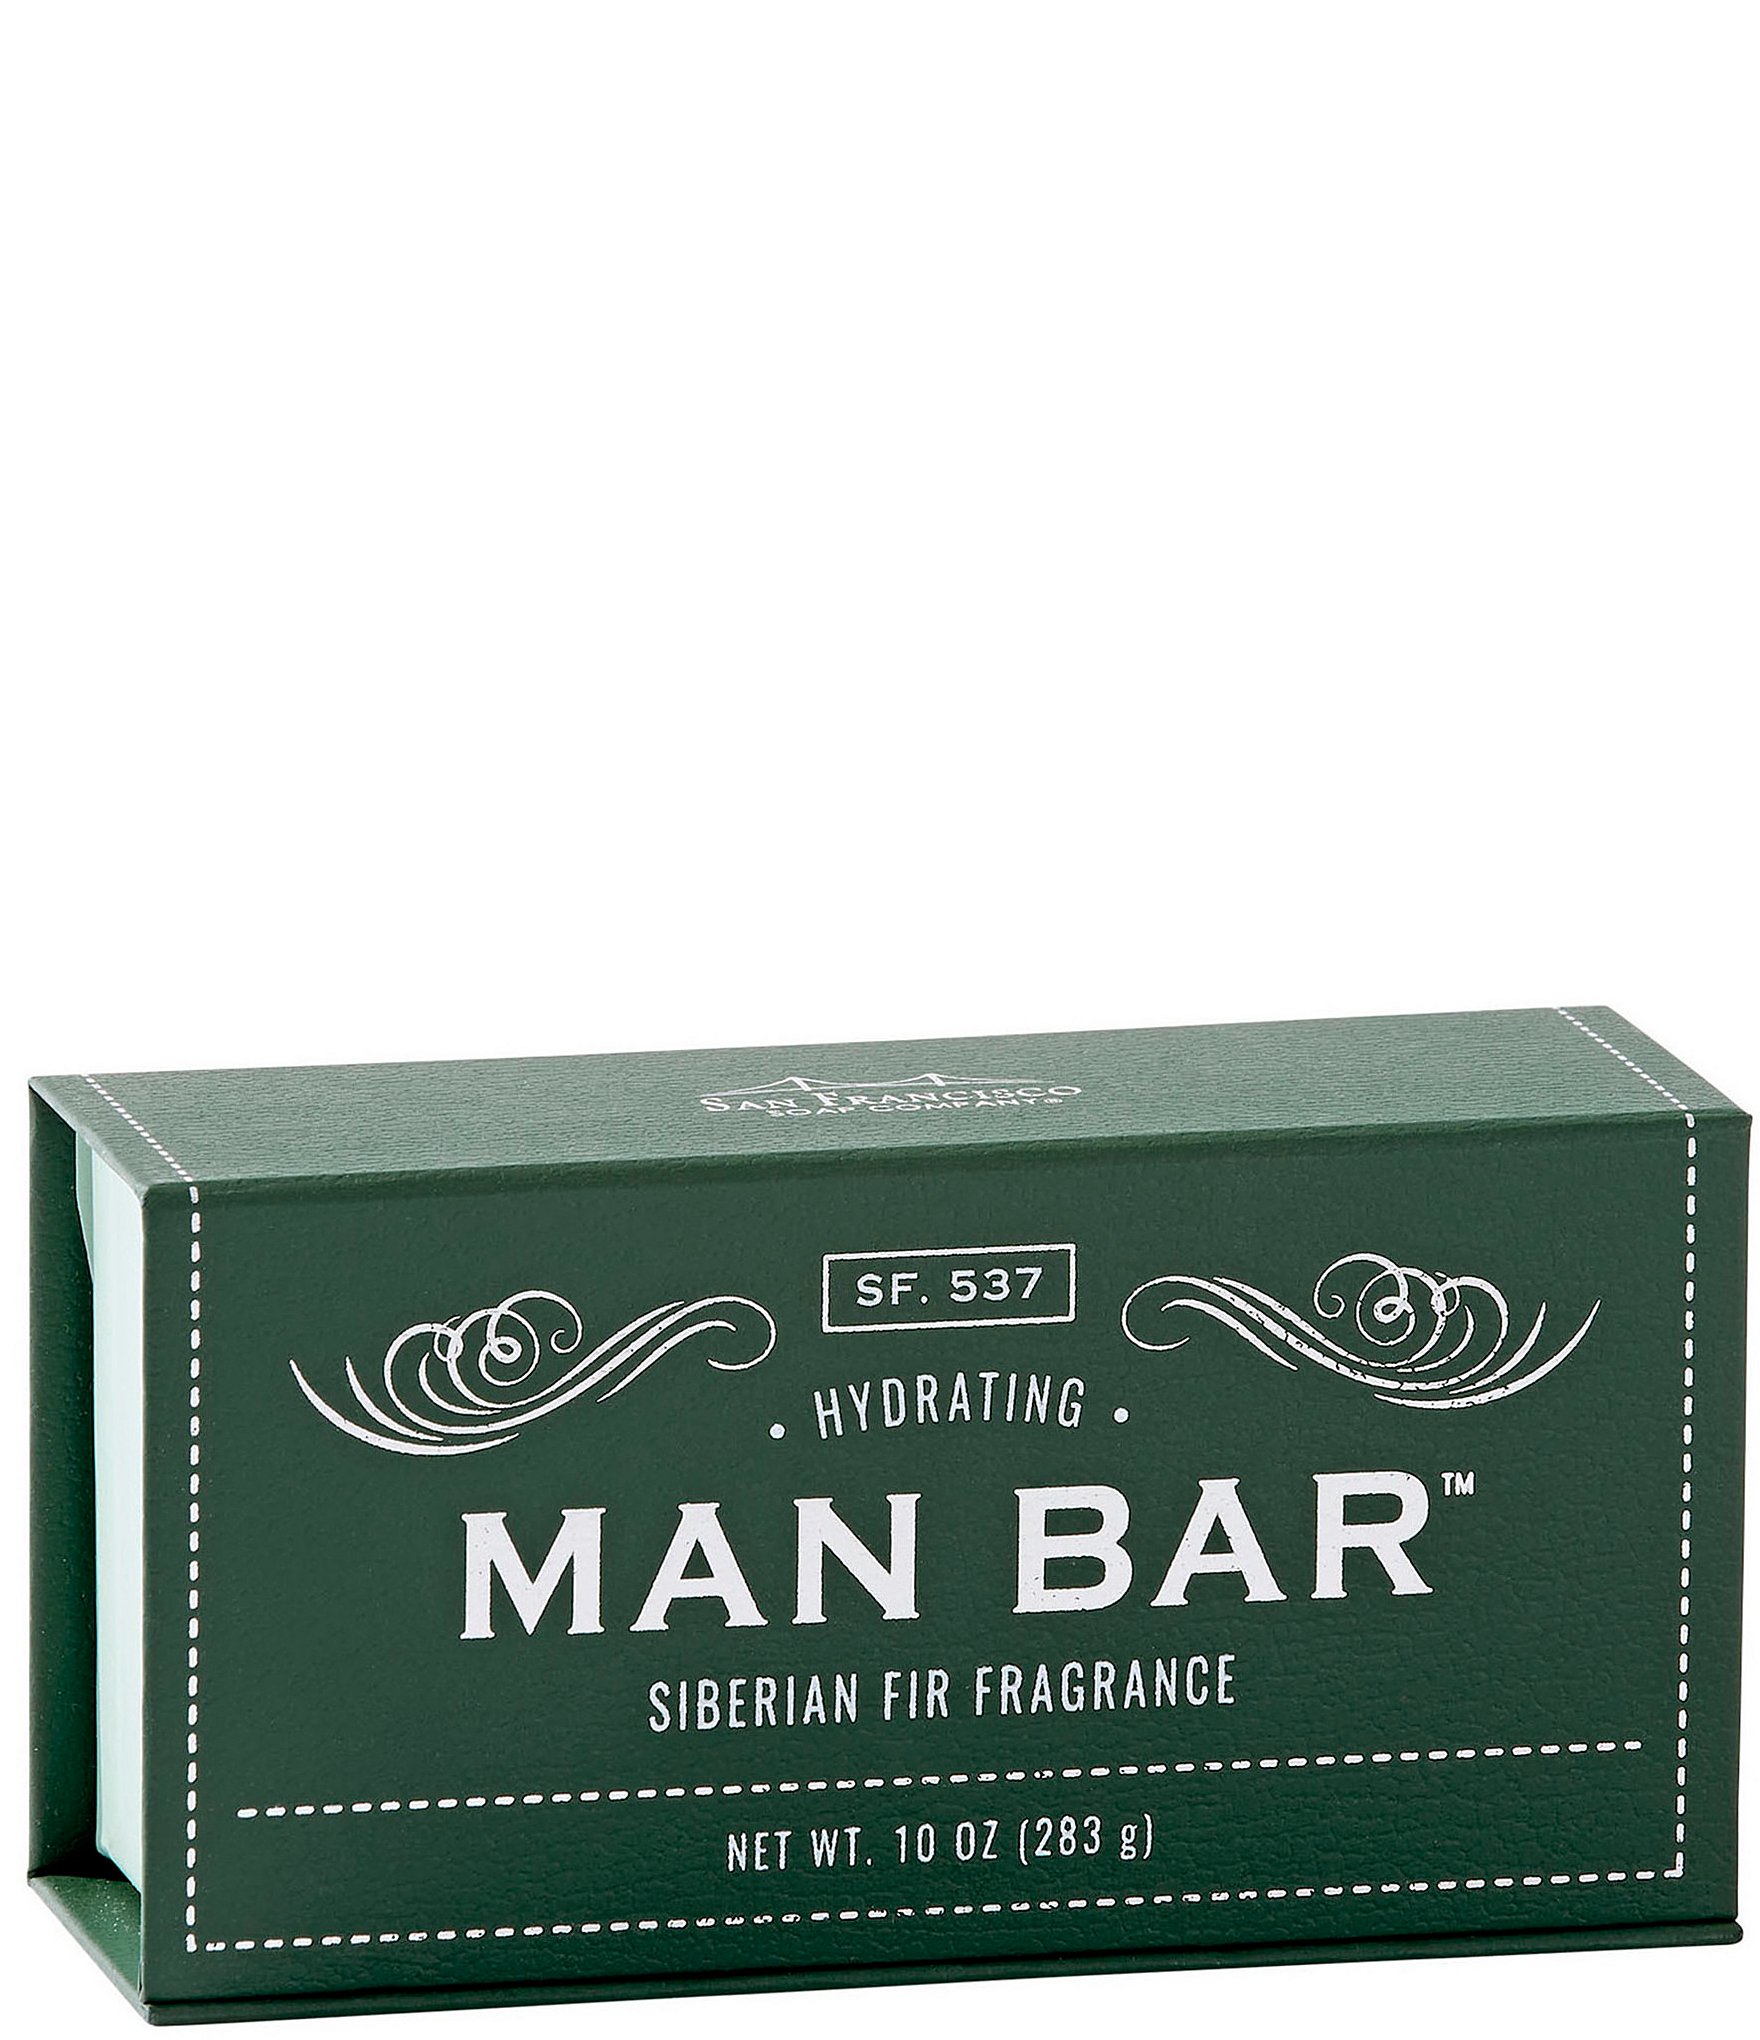 San Francisco Soap Company MAN WASH Bar 10oz - Cedar & Bourbon